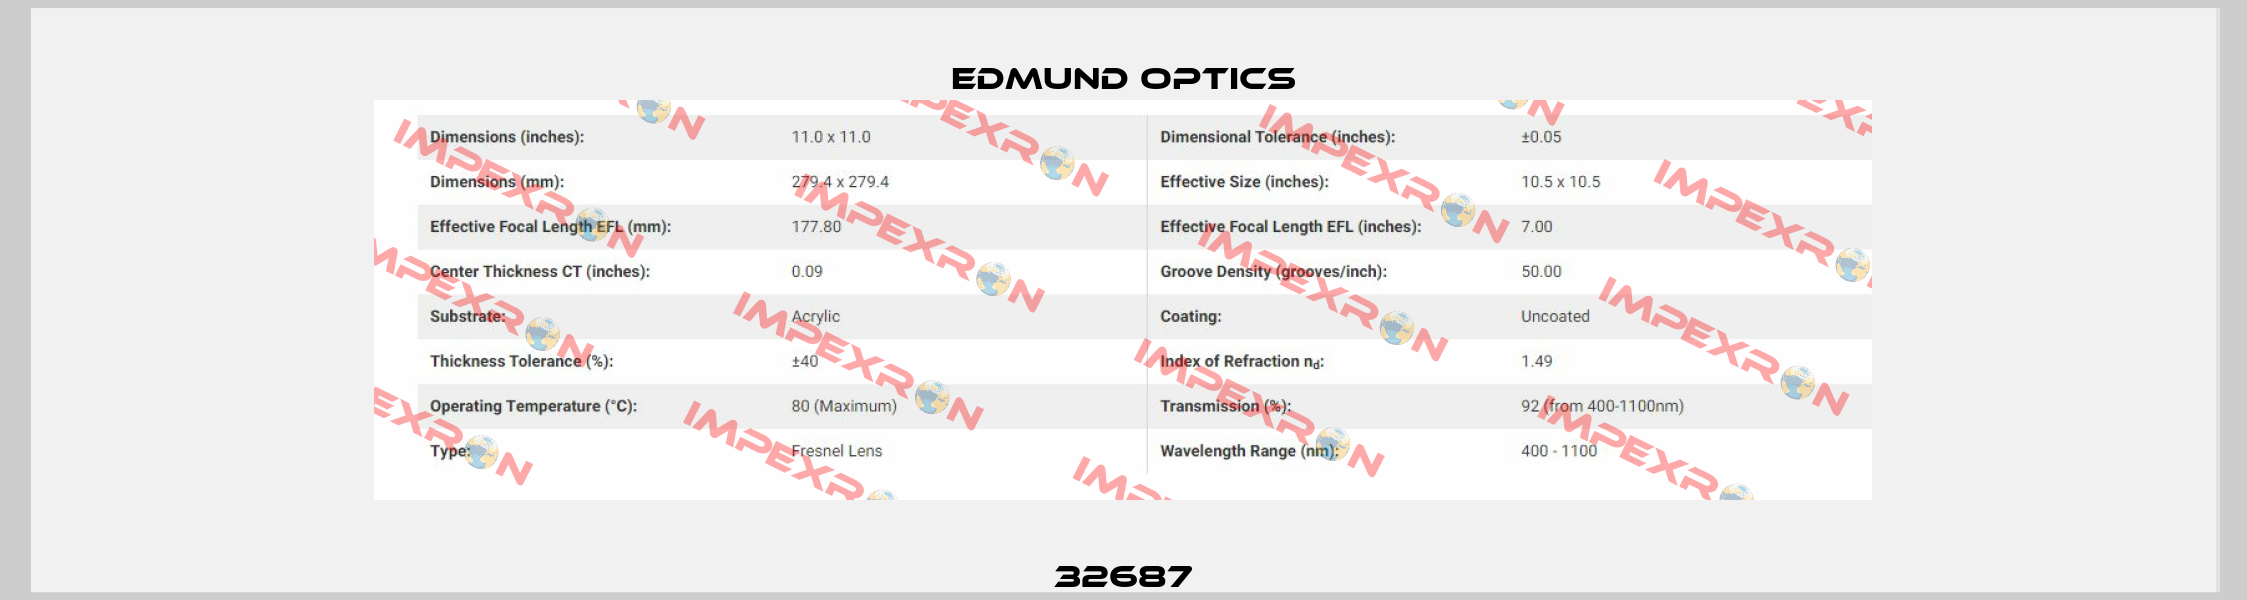 32687 Edmund Optics